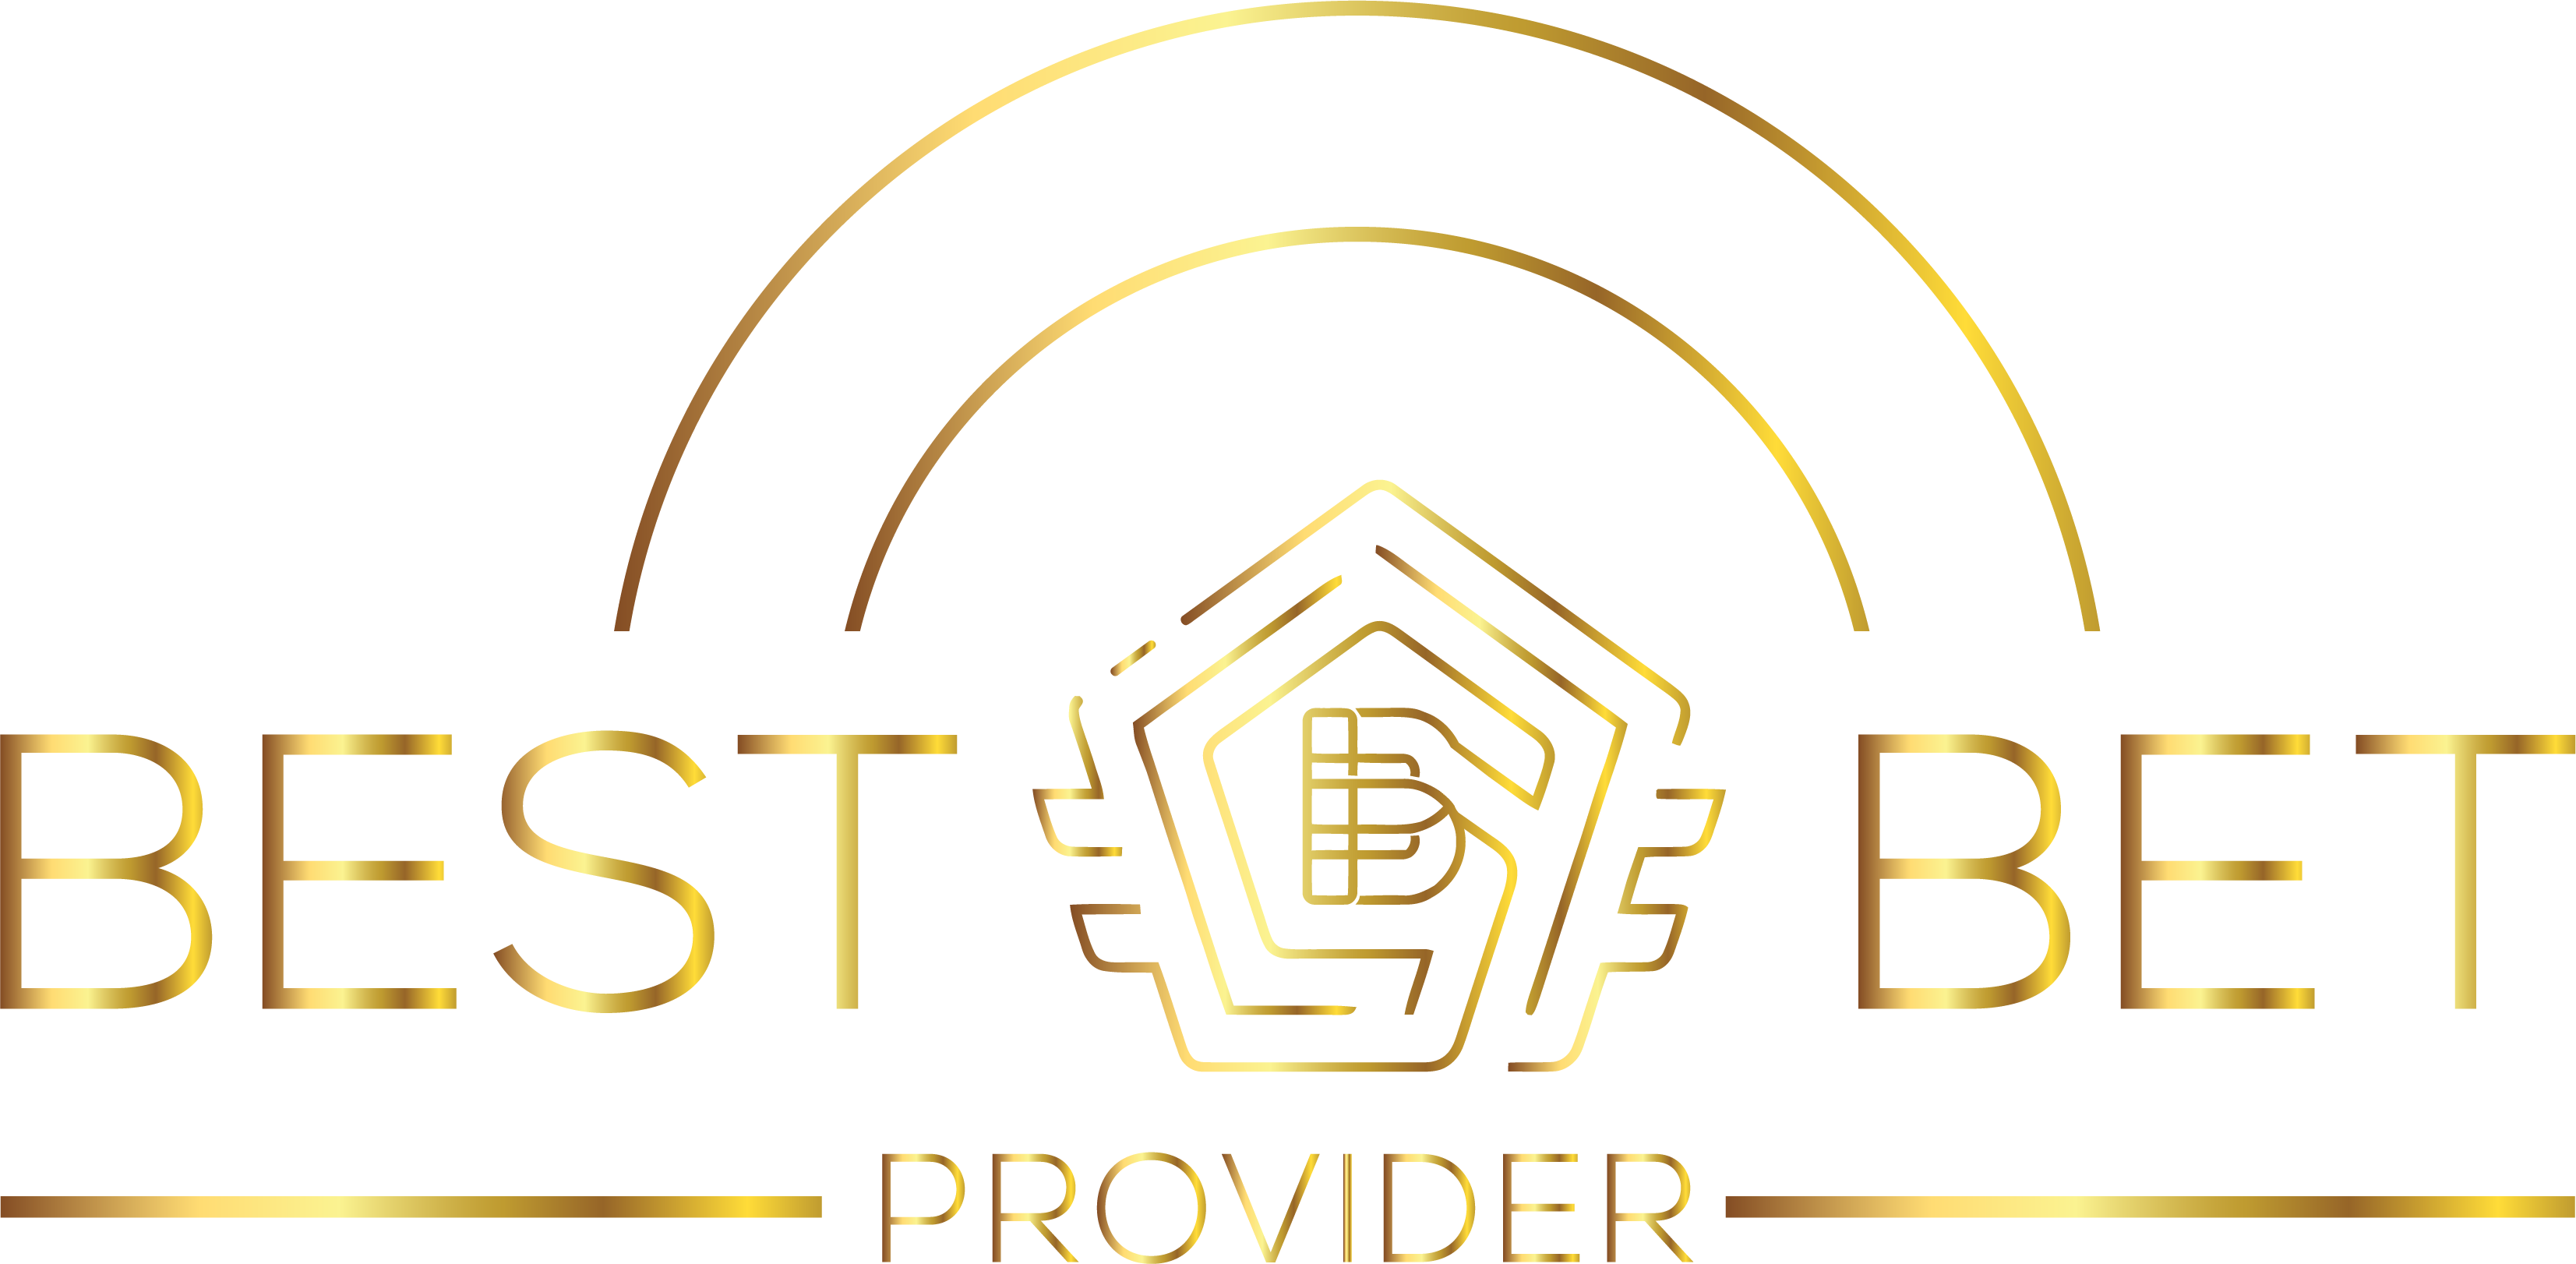 Best-Bet-Provider